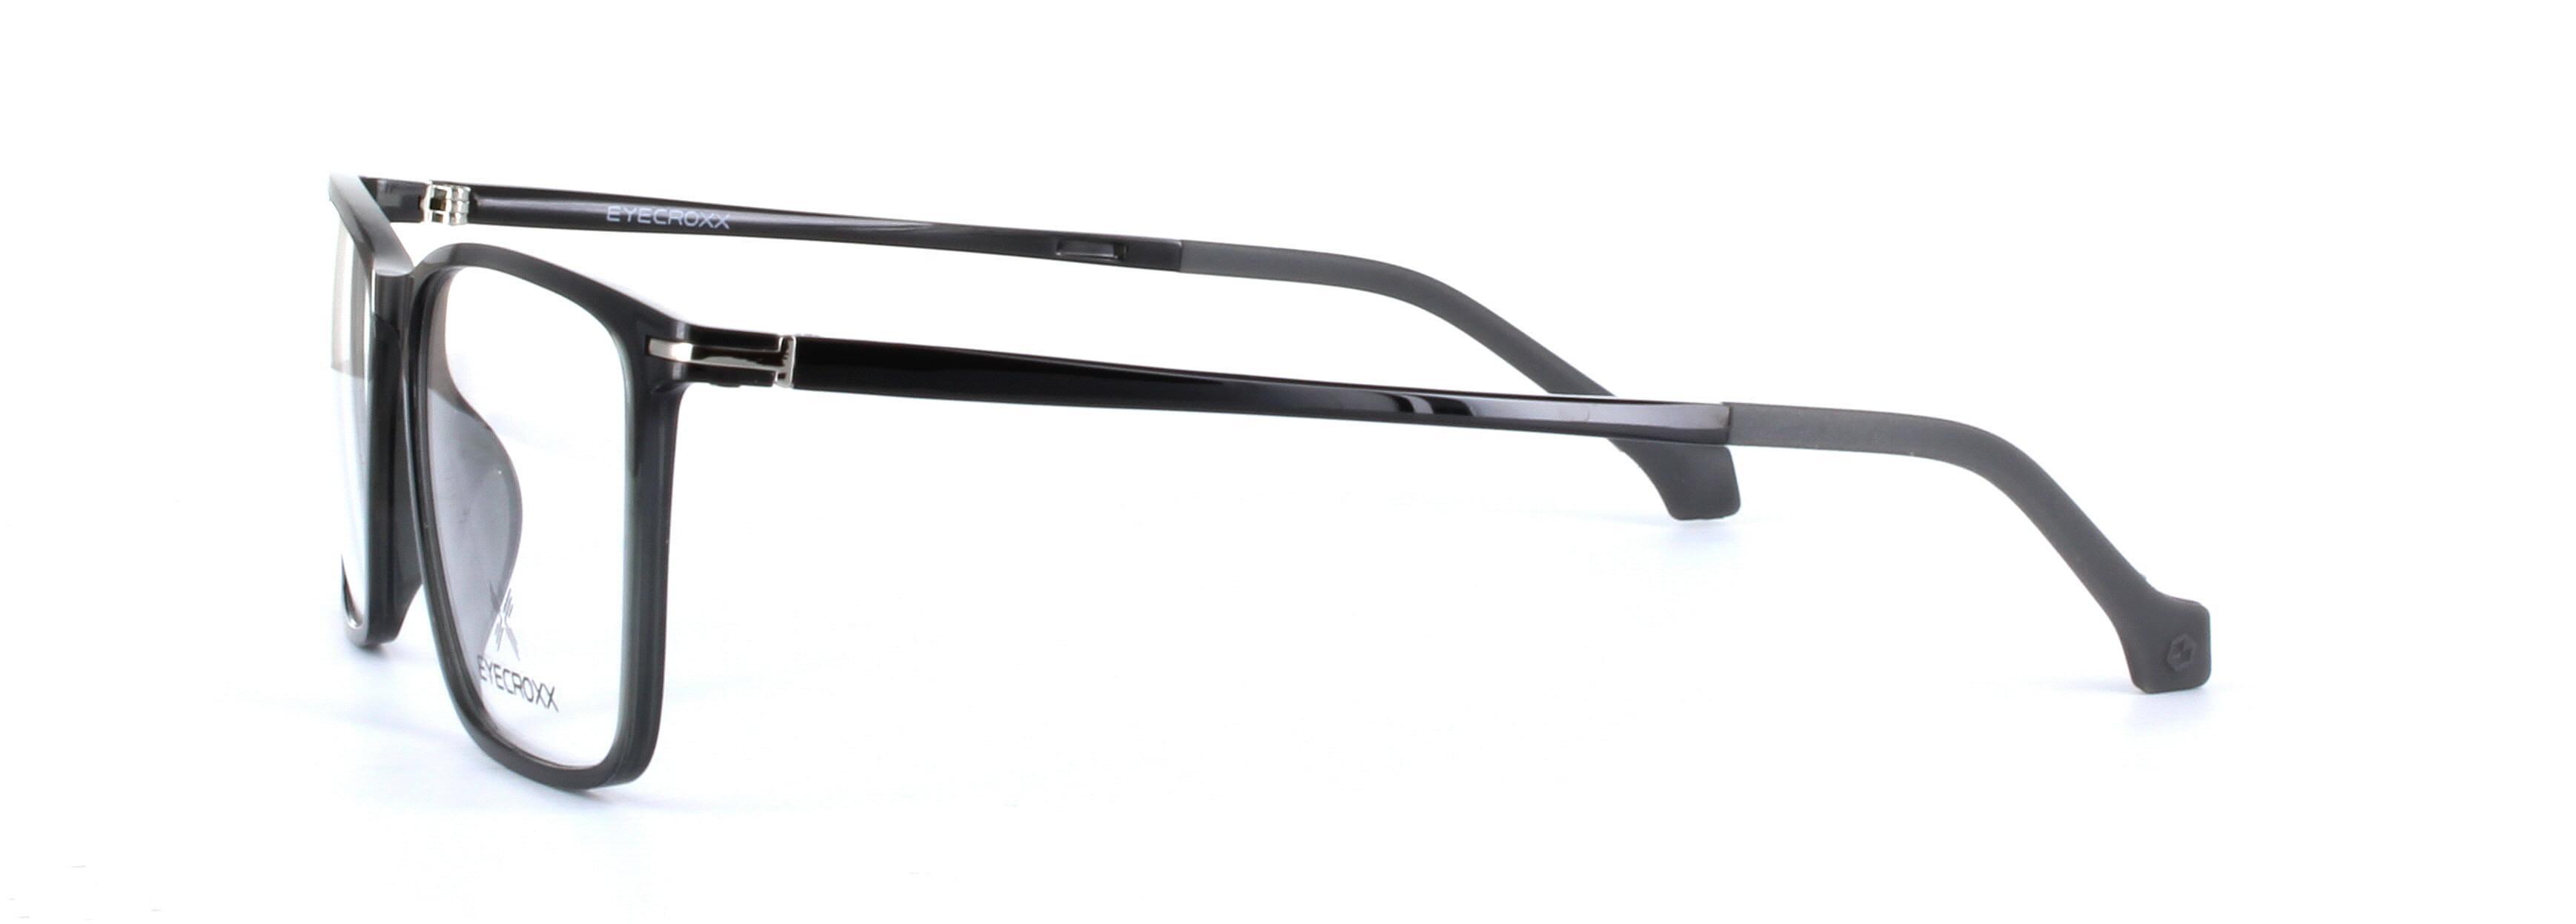 Eyecroxx 588 Grey Full Rim Plastic Glasses - Image View 2